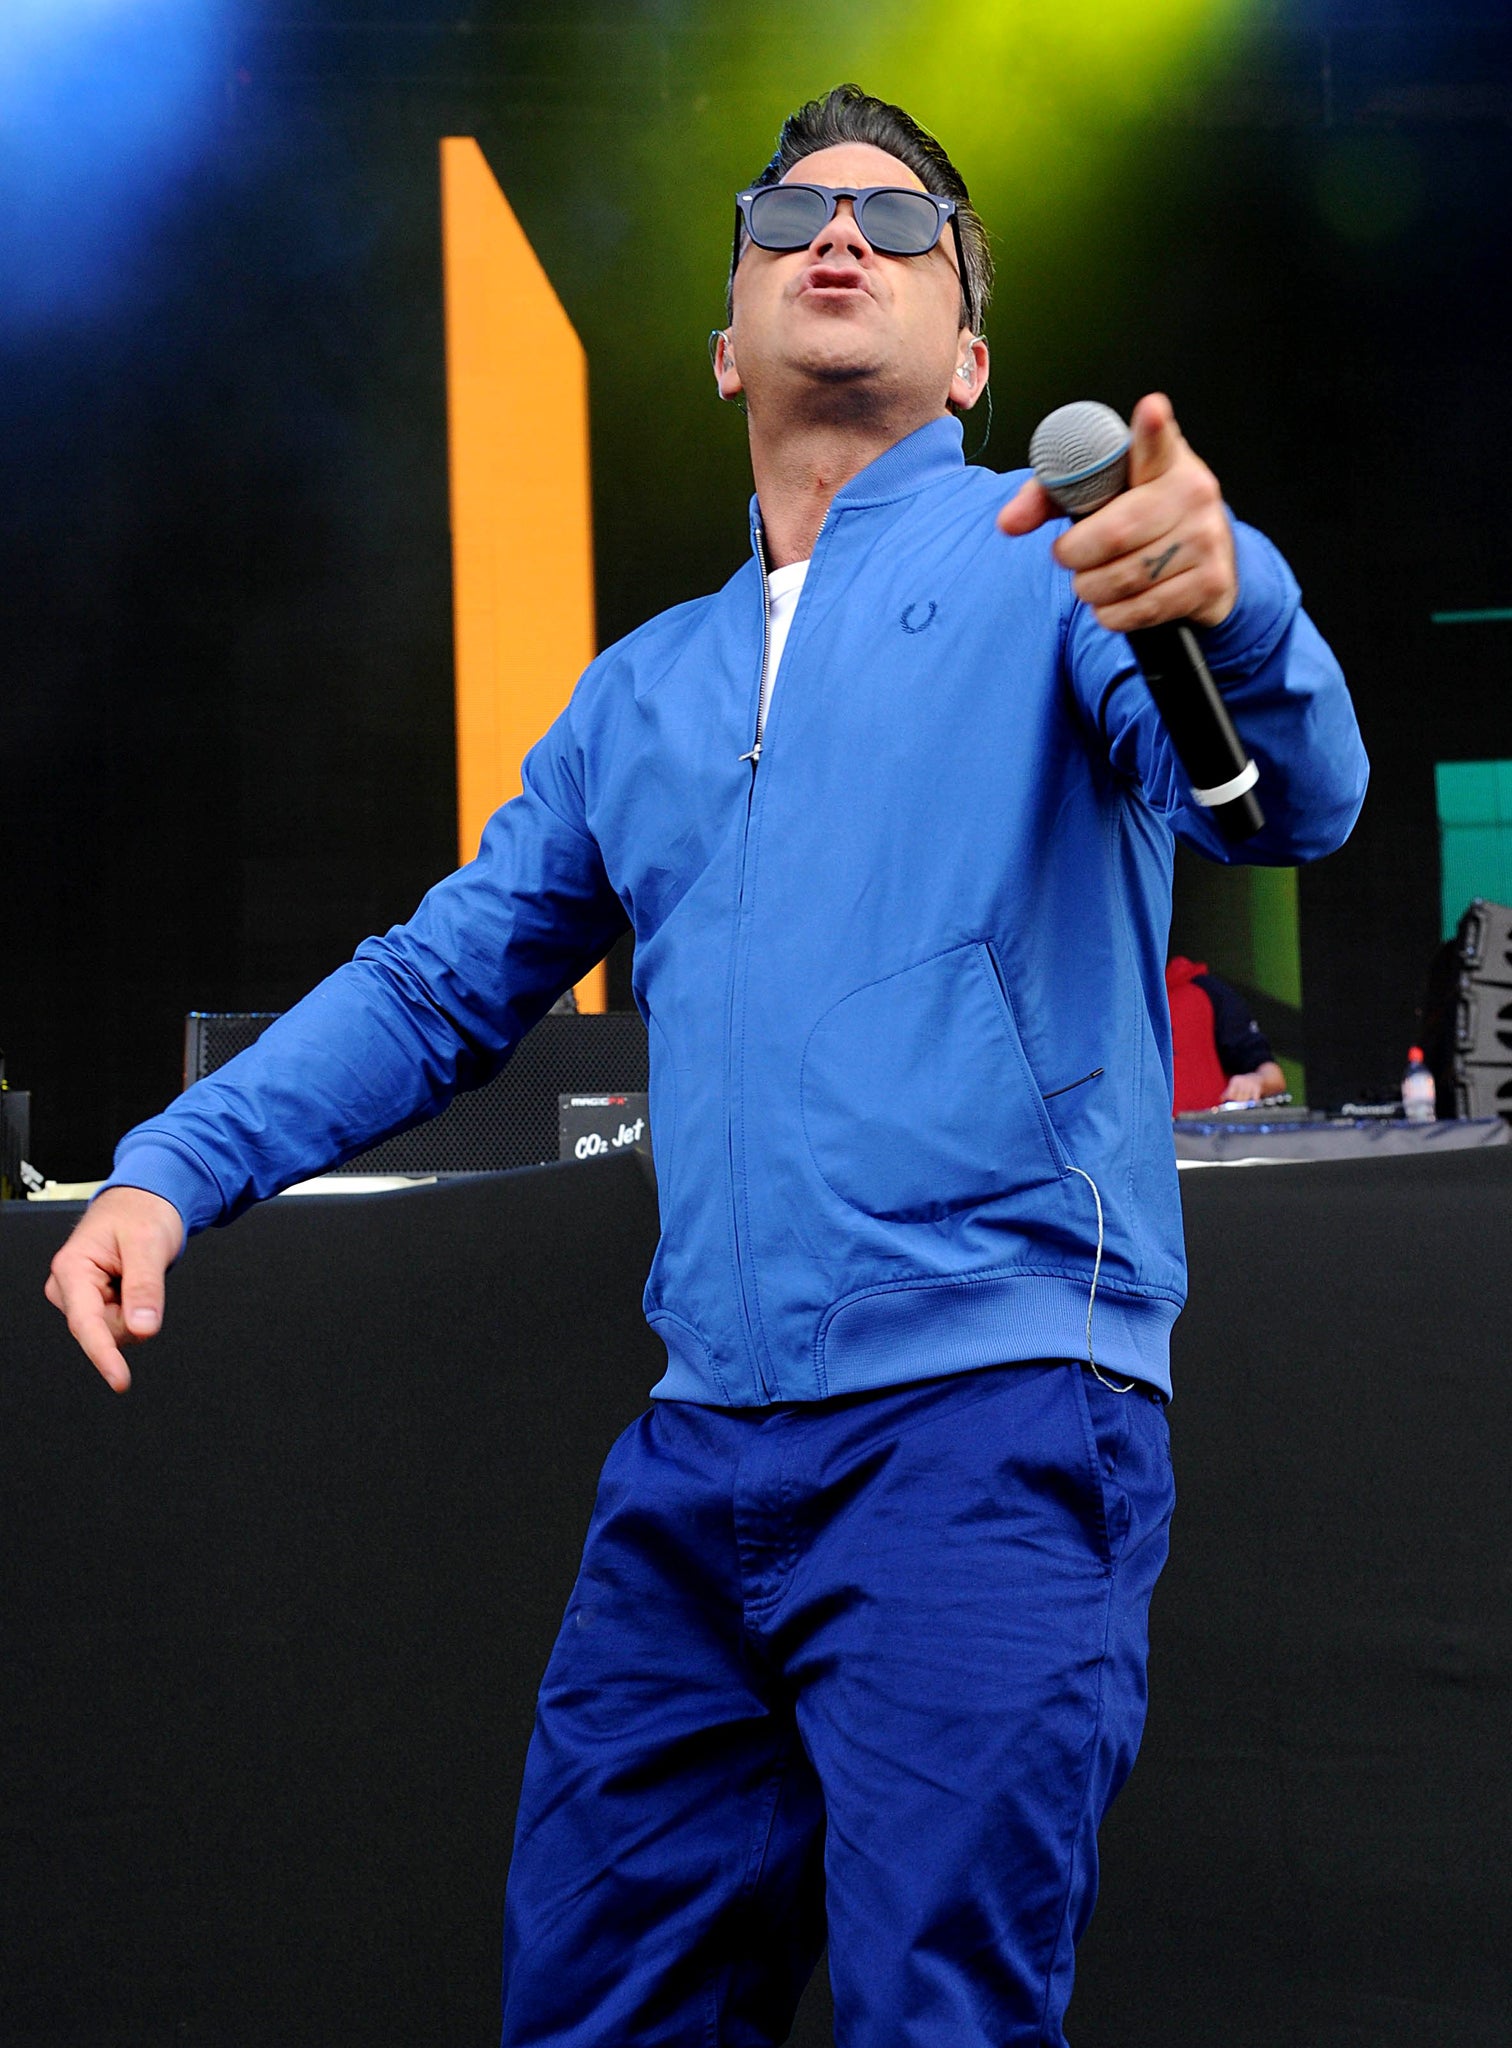 Robbie Williams performing live